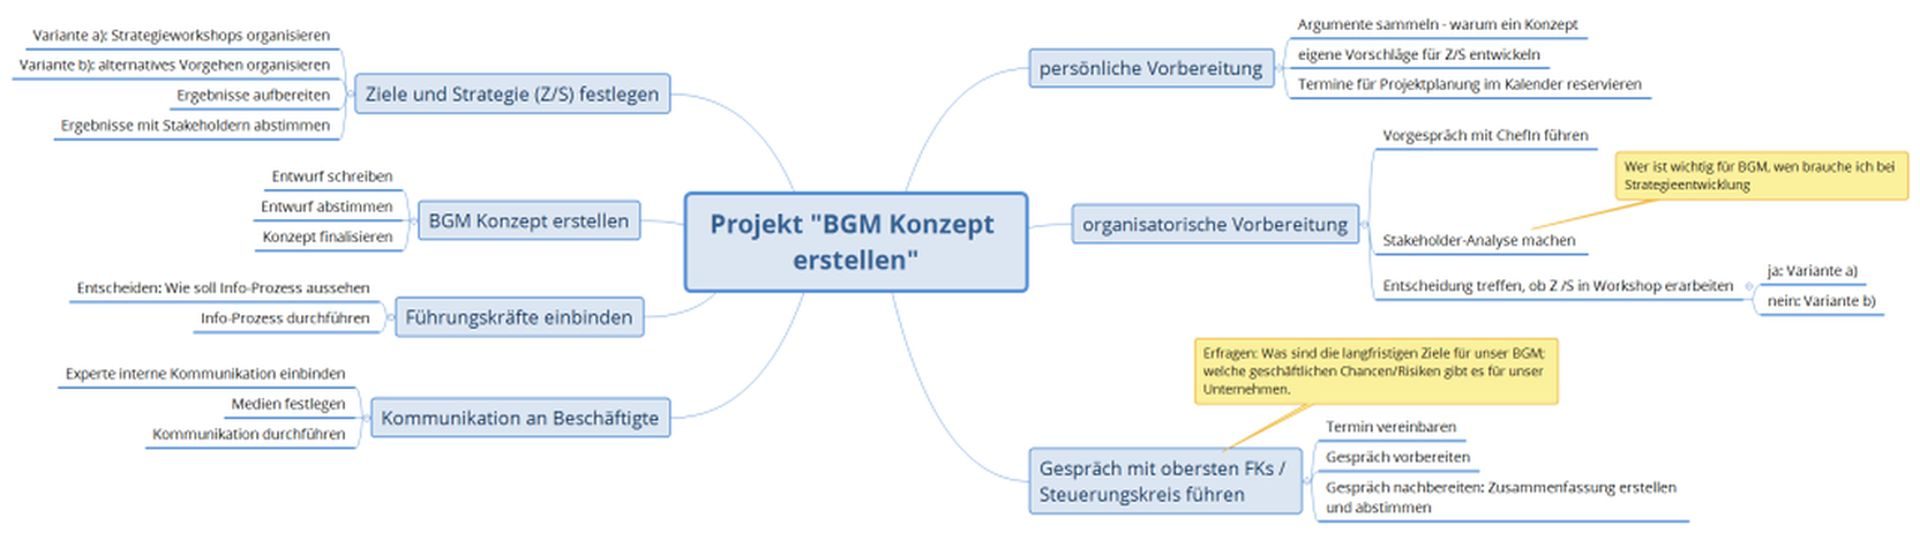 mindmap-projekt-bgm-konzept